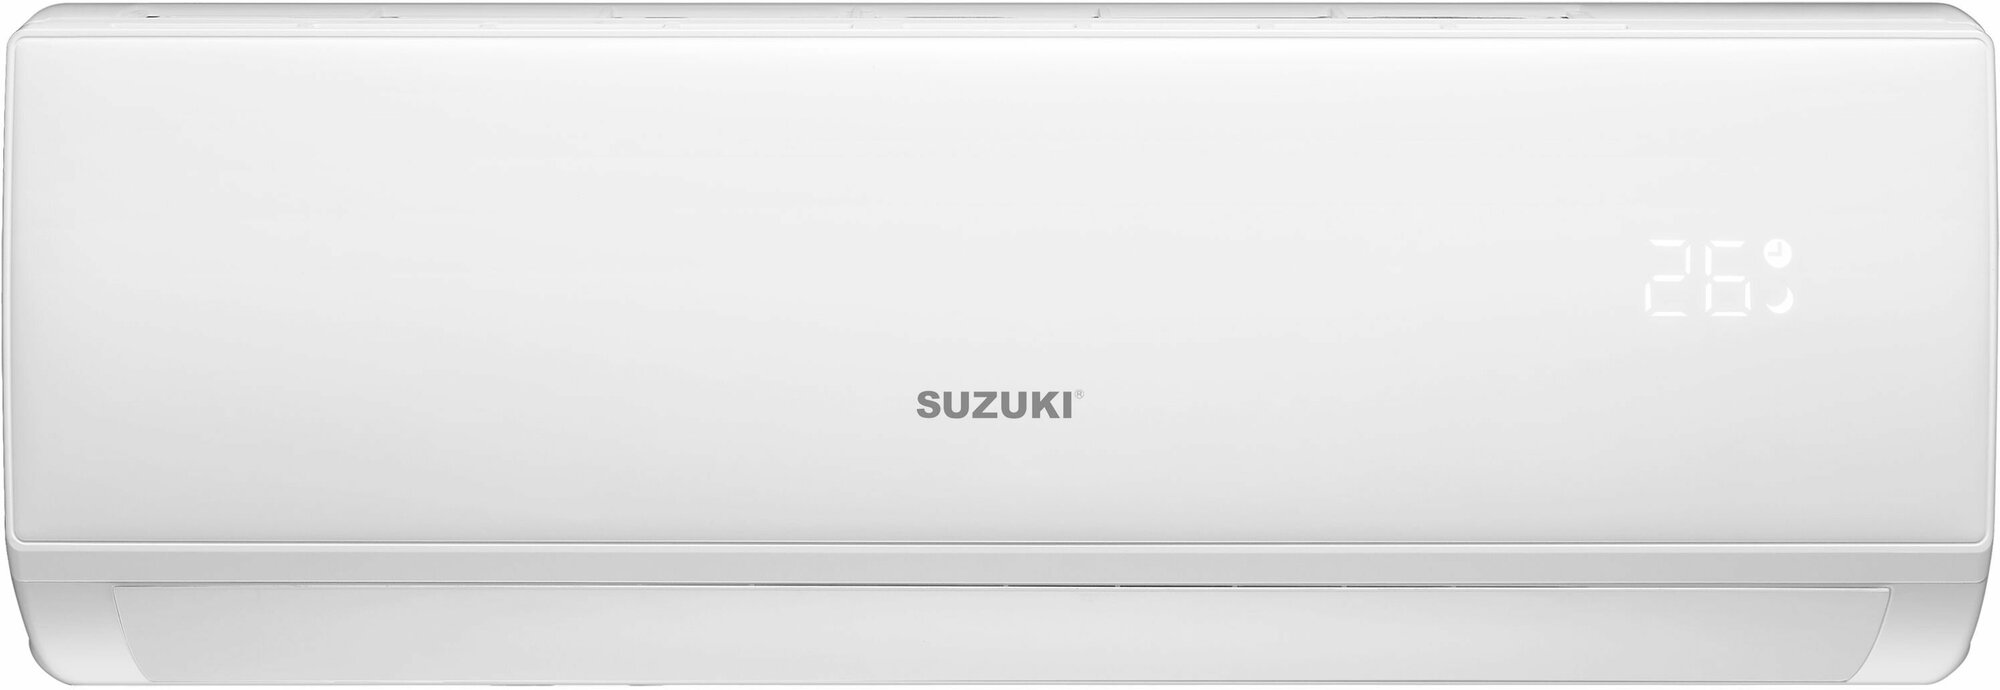 Сплит-система Suzuki SUSH-S099BE/SURH-S099BE